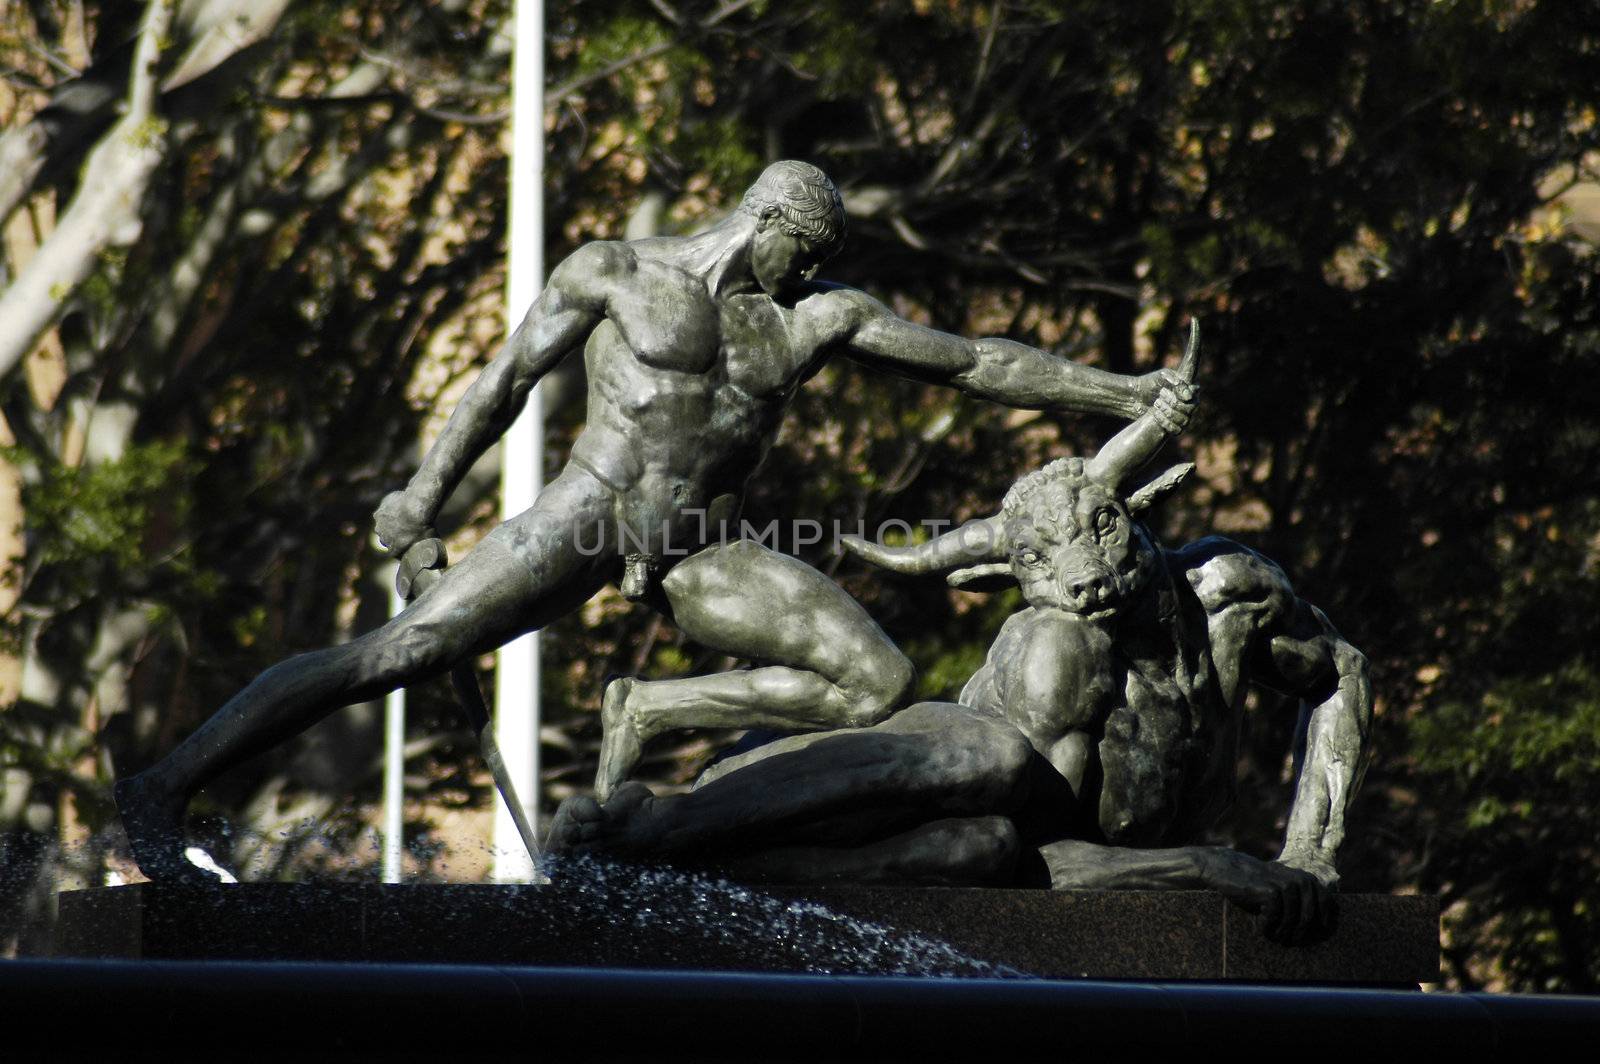 theseus and minotaur, archibald fountain in hyde park, sydney